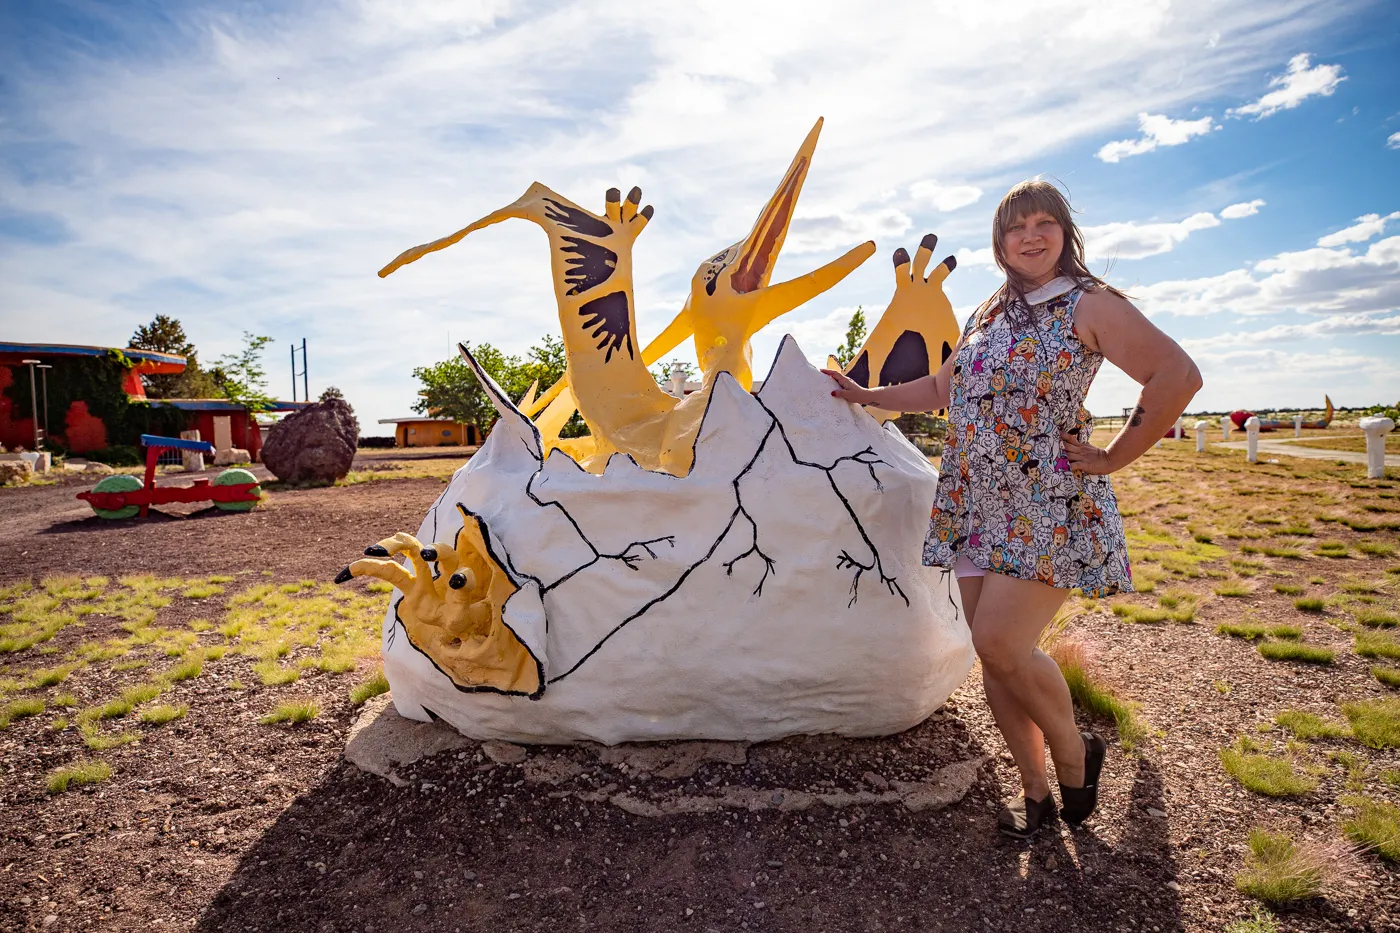 Hatching dinosaur egg at Flintstones Bedrock City in Williams, Arizona - Arizona Roadside Attraction